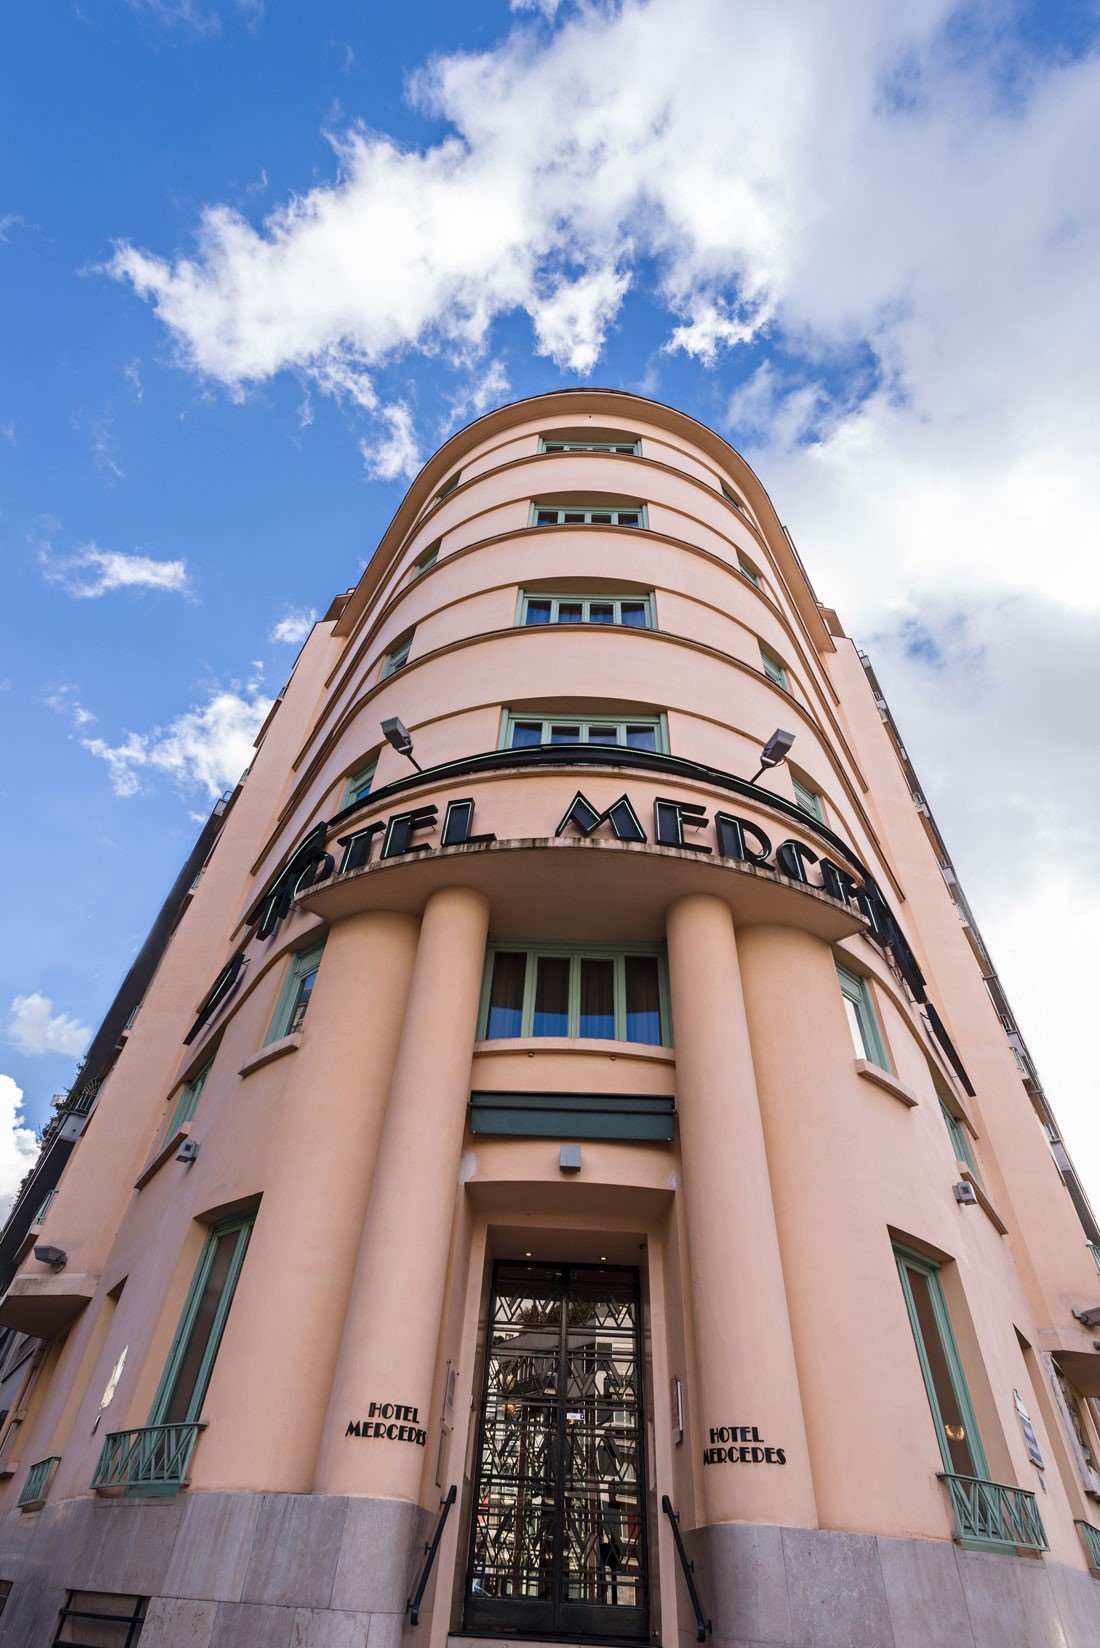 Facade of the Best Western Hotel Mercedes Paris